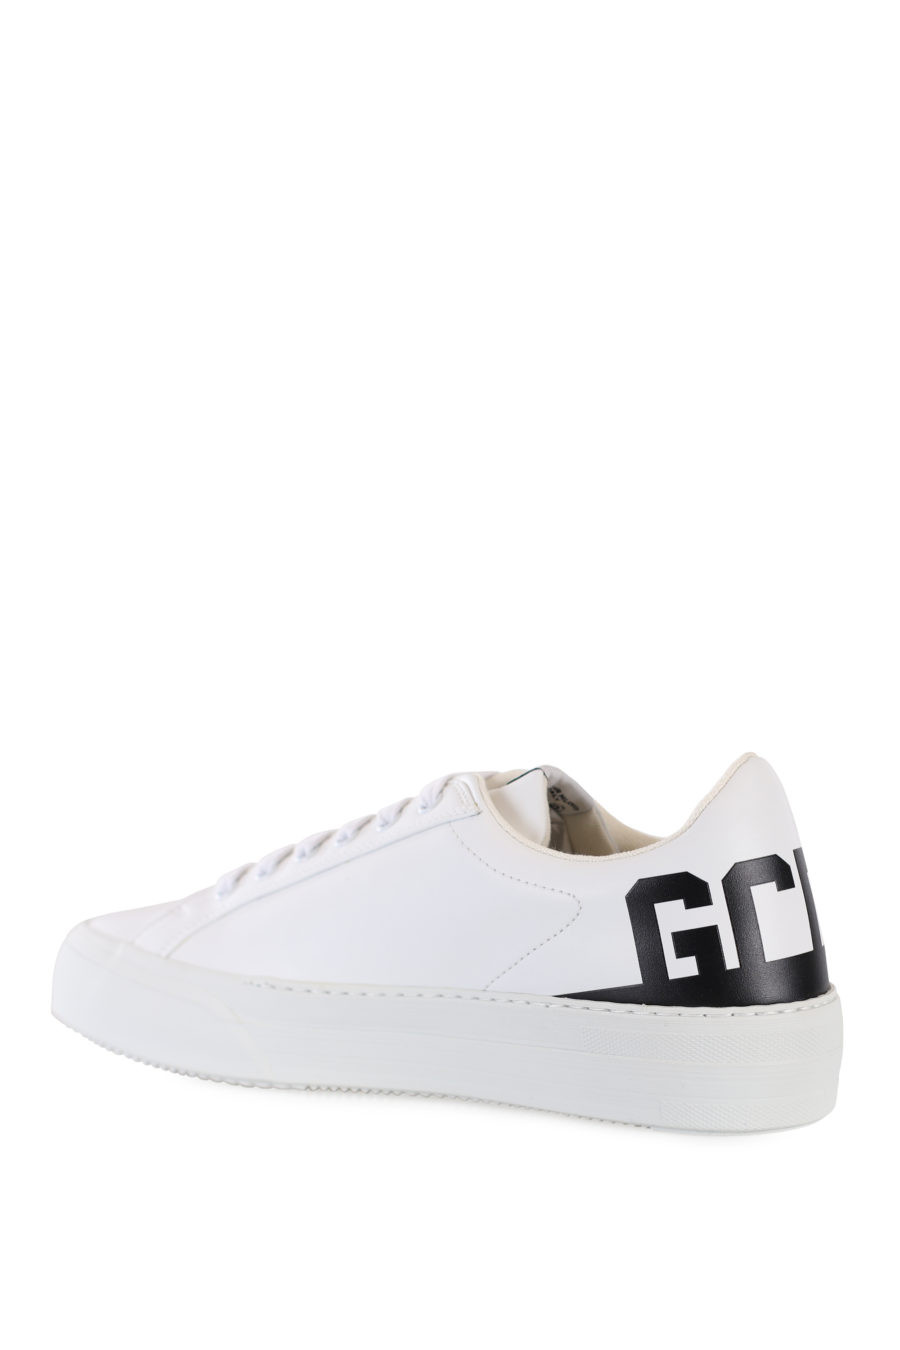 Zapatillas blancas con logo negro - IMG 1730